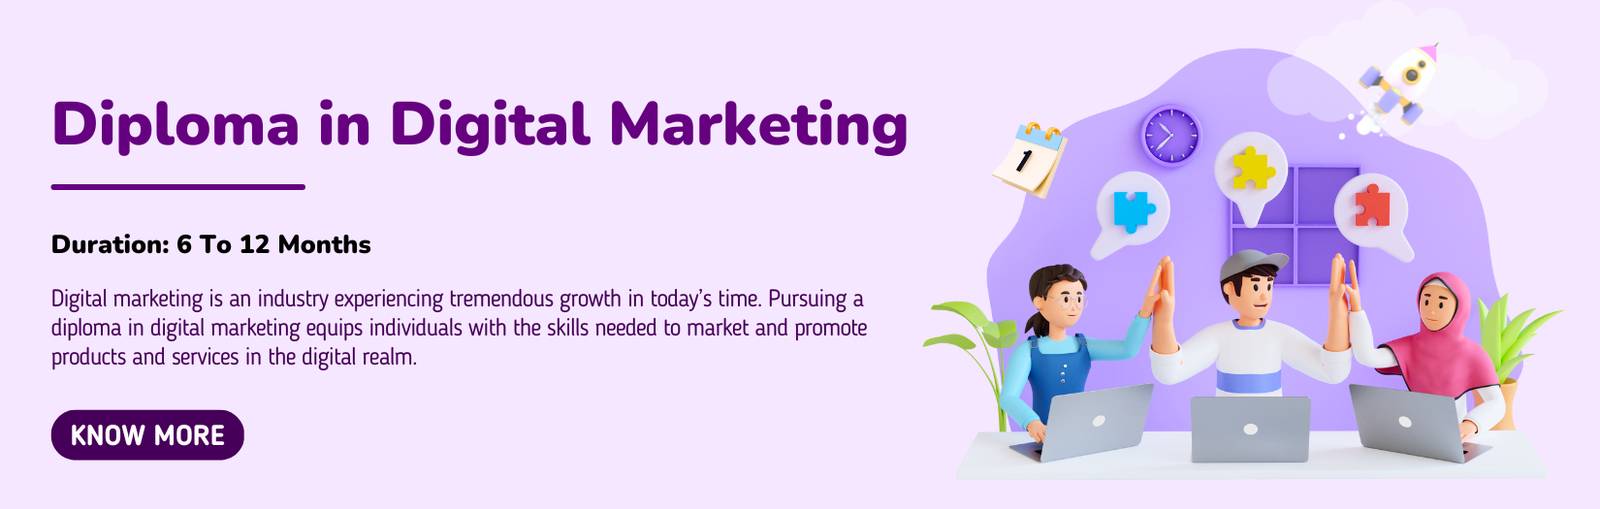 Diploma-in-digital-marketing